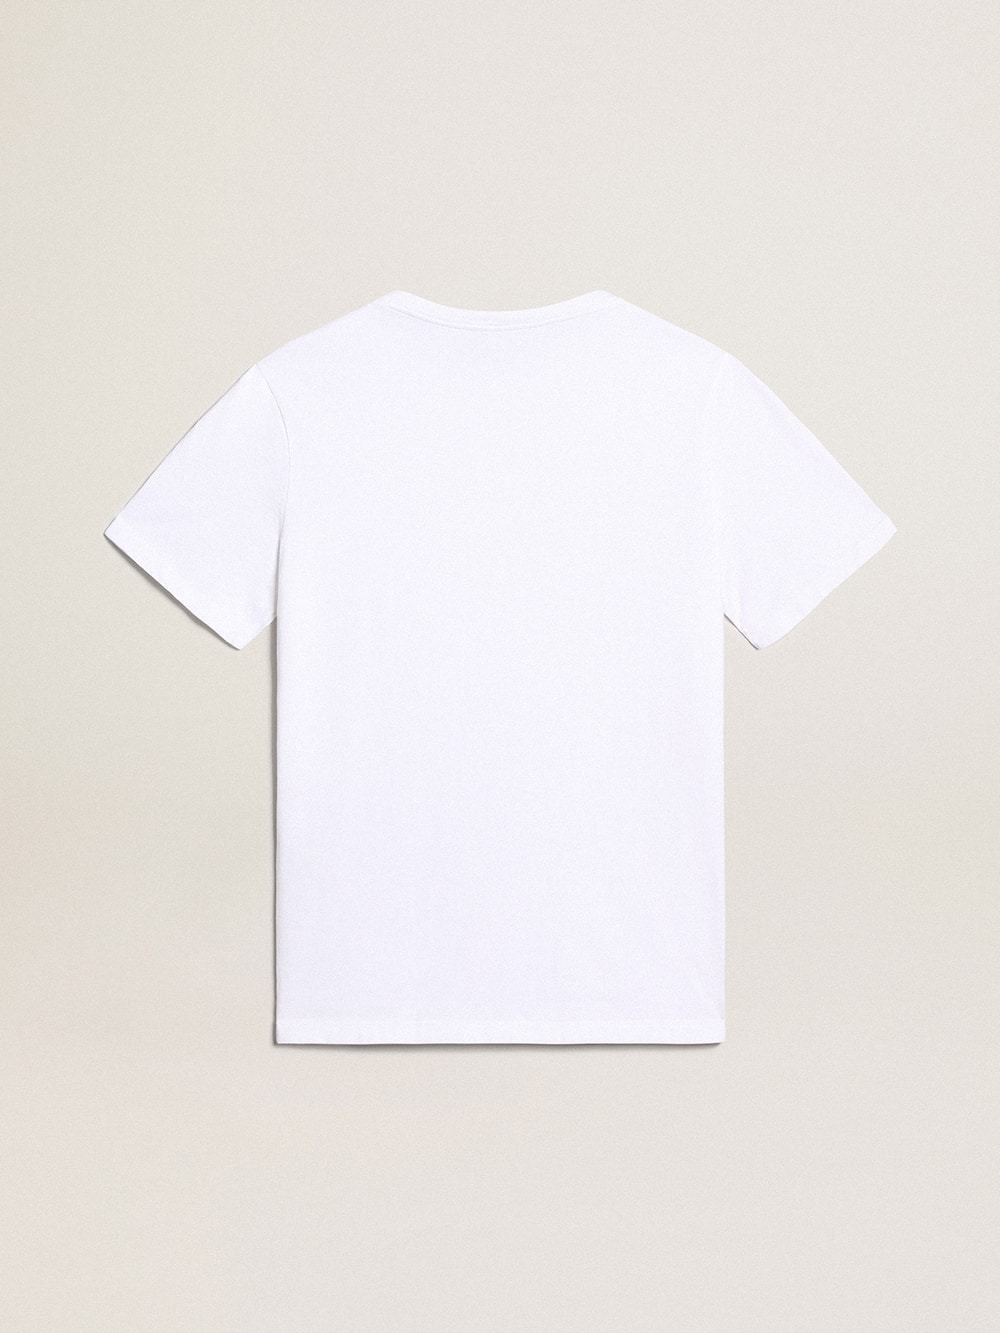 Golden Goose - T-shirt bianca con logo nero a contrasto sul davanti in 